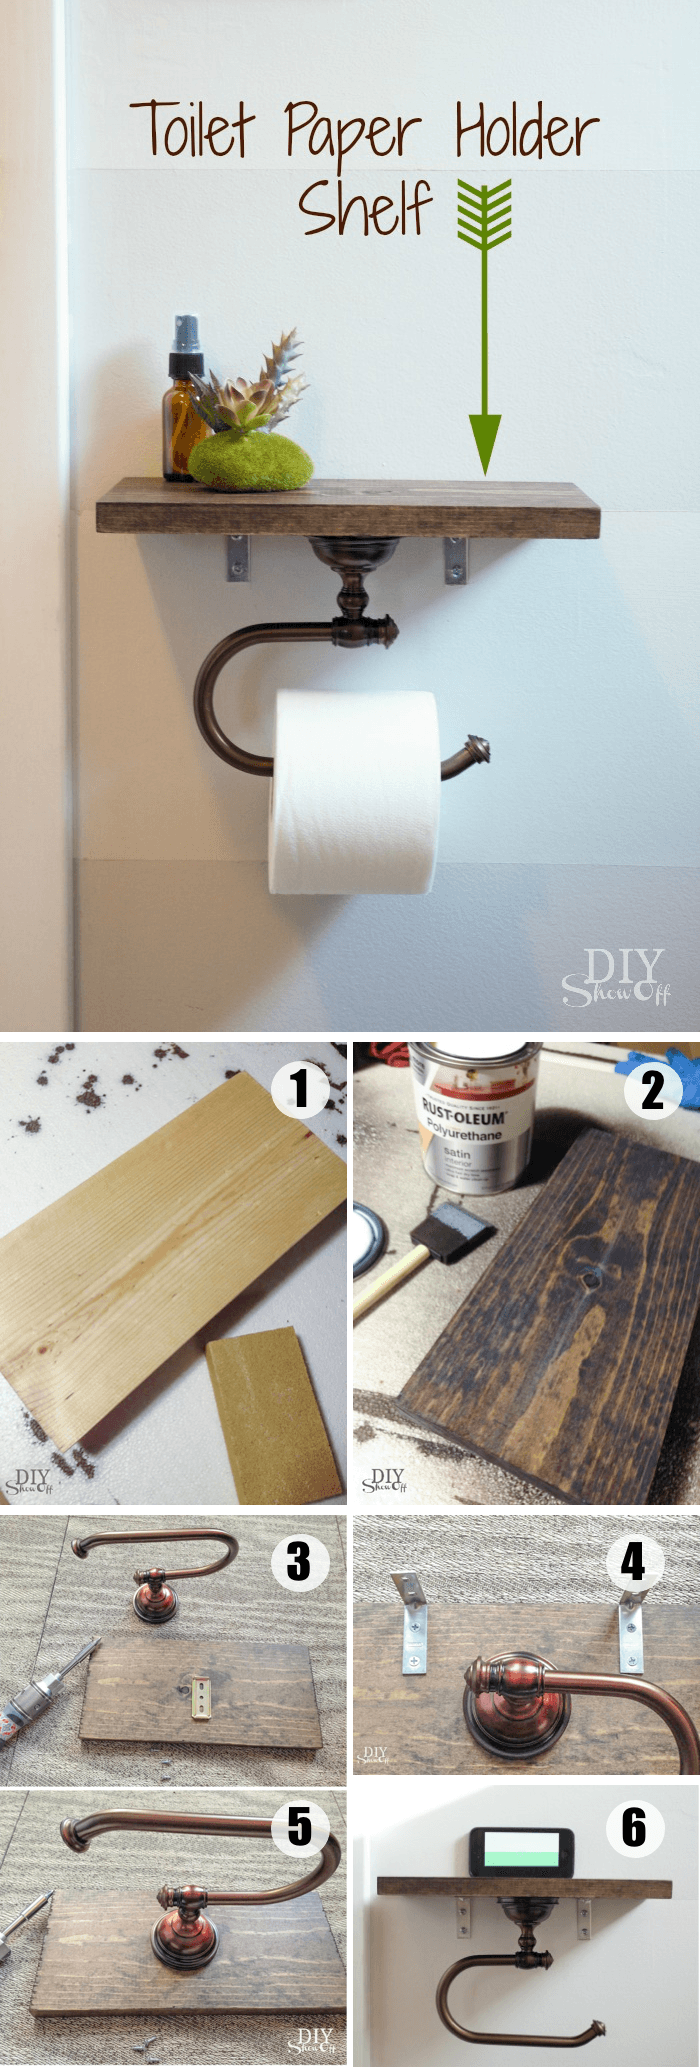  DIY Toilet Paper Holder with Shelf